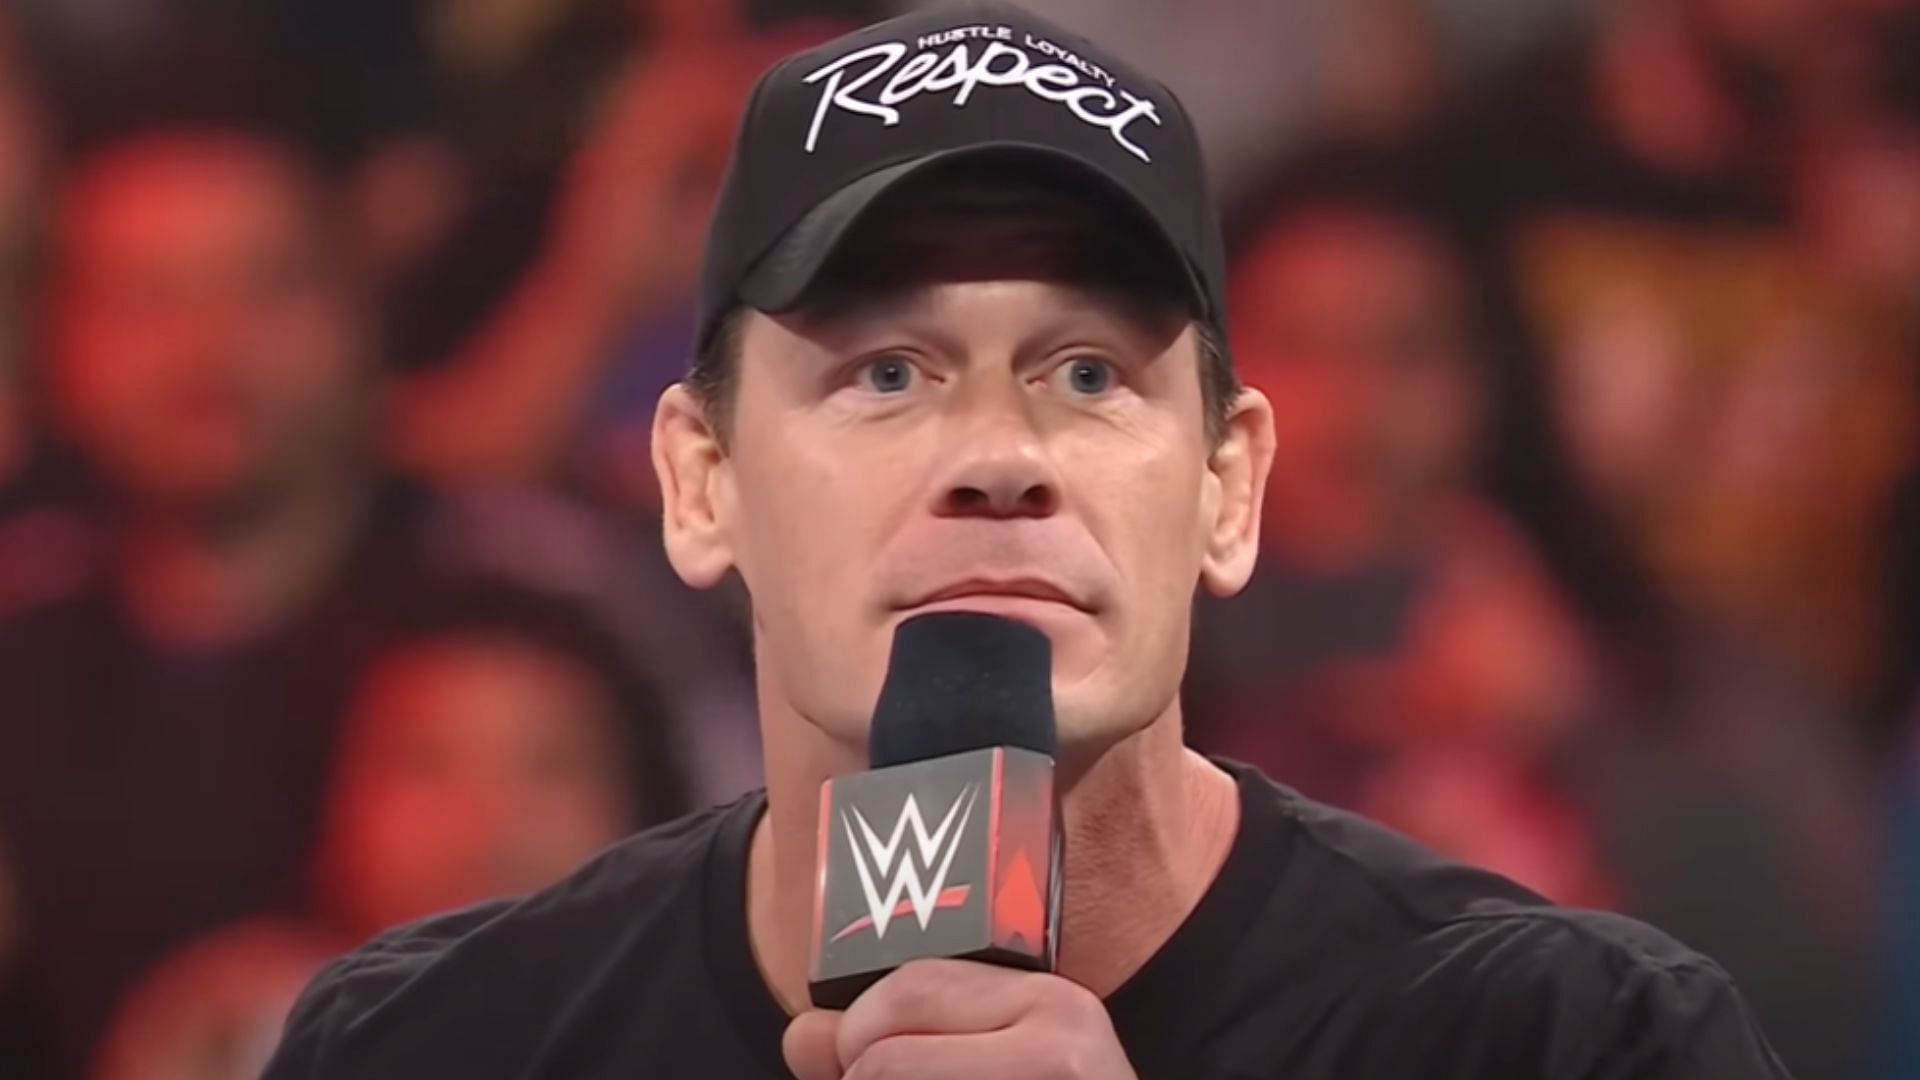 John Cena has headlined WrestleMania five times